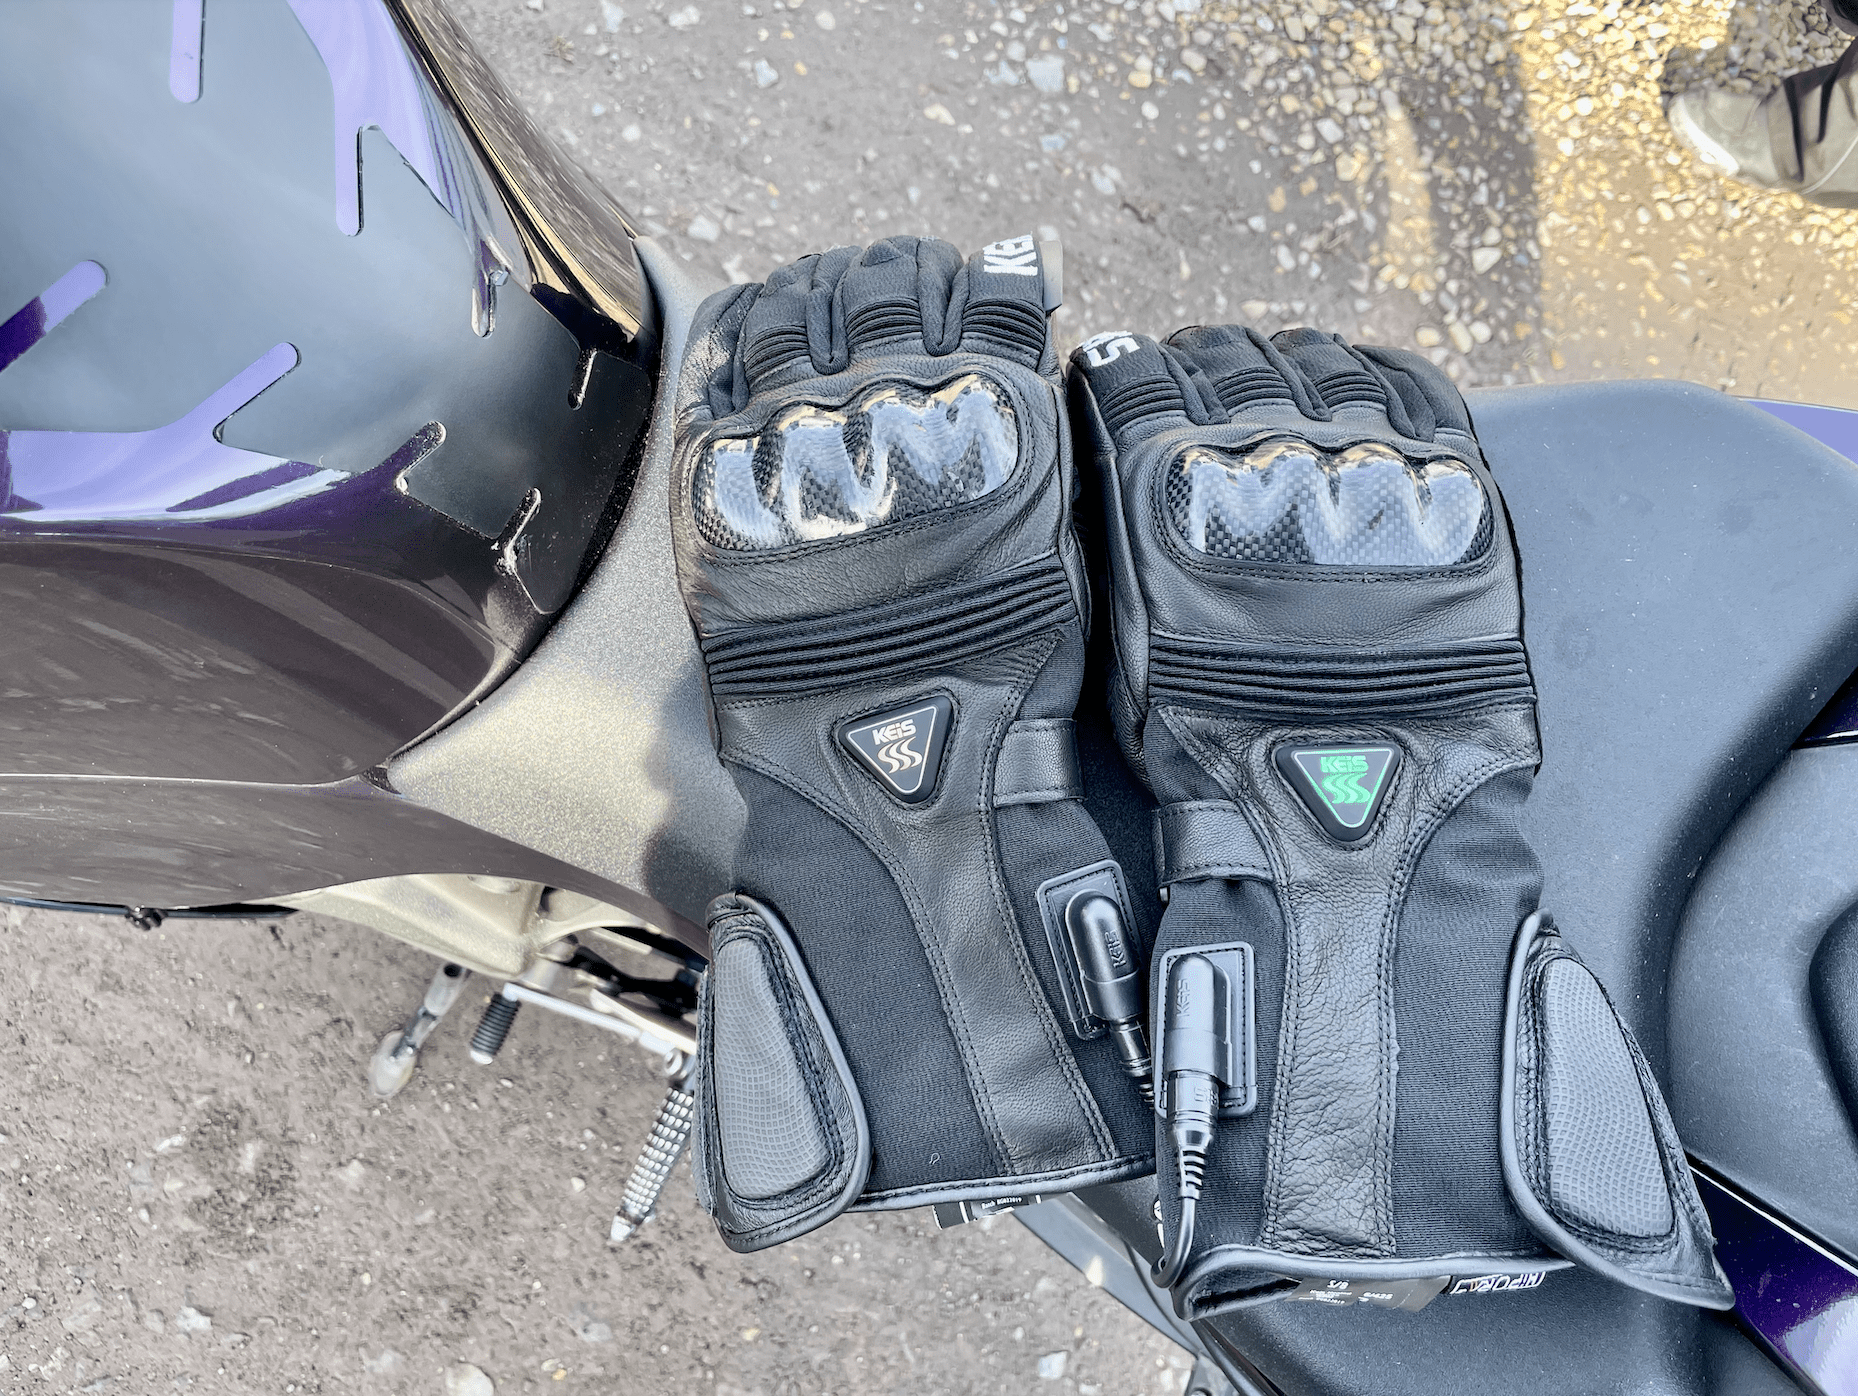 Blue Thermal Waterproof Motorbike Motorcycle Gloves Carbon Knuckle Protection